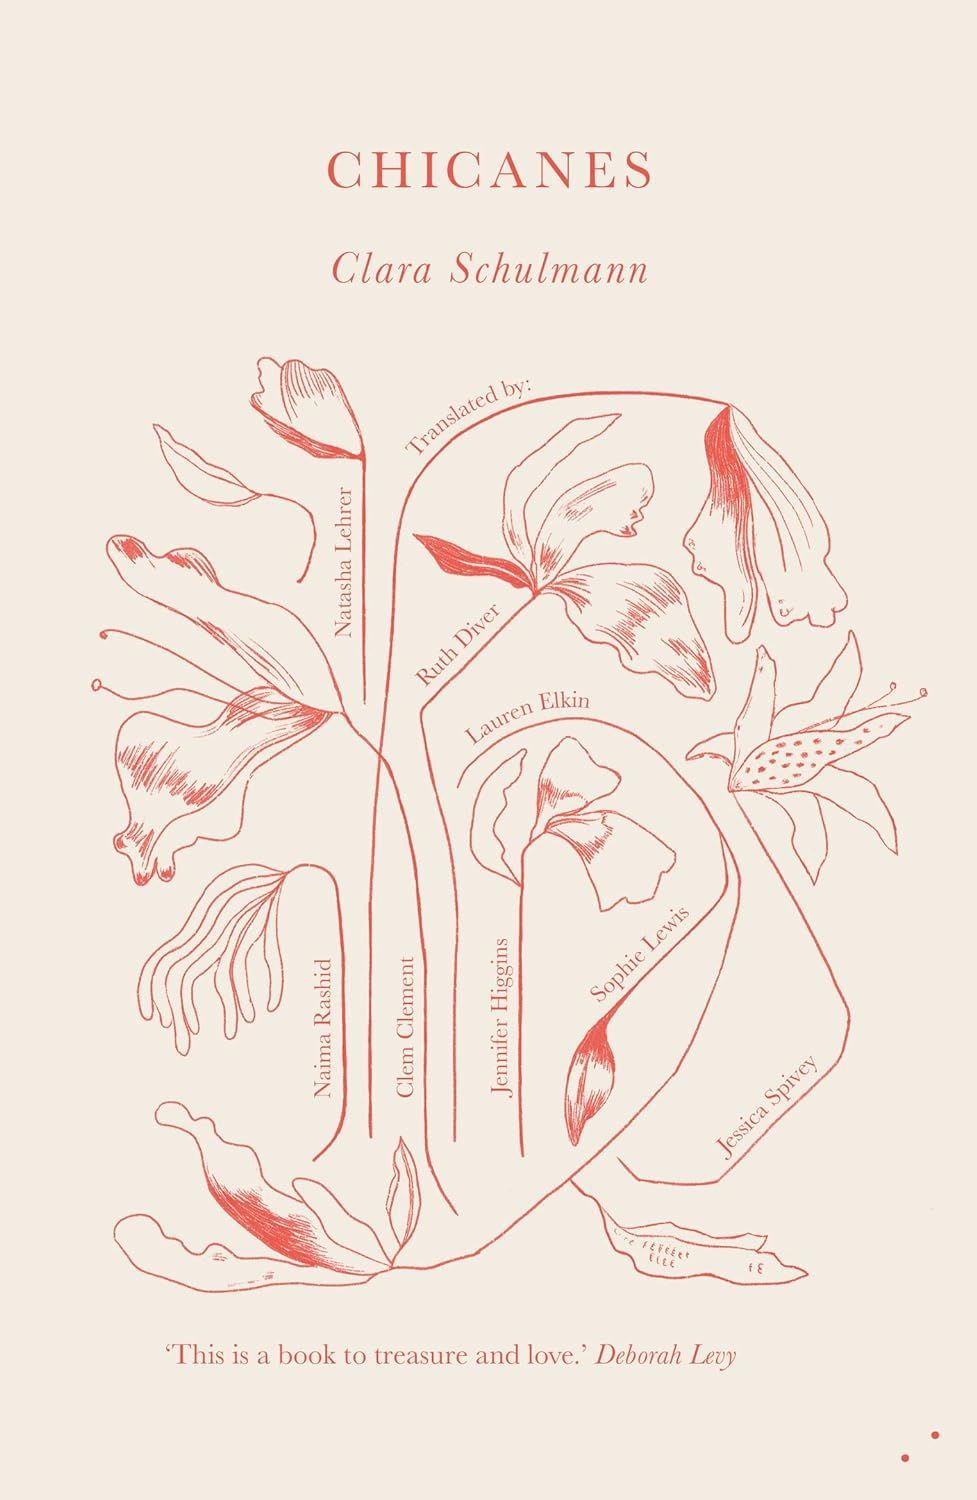 A Feminist Chorus: On Clara Schulmann’s “Chicanes”